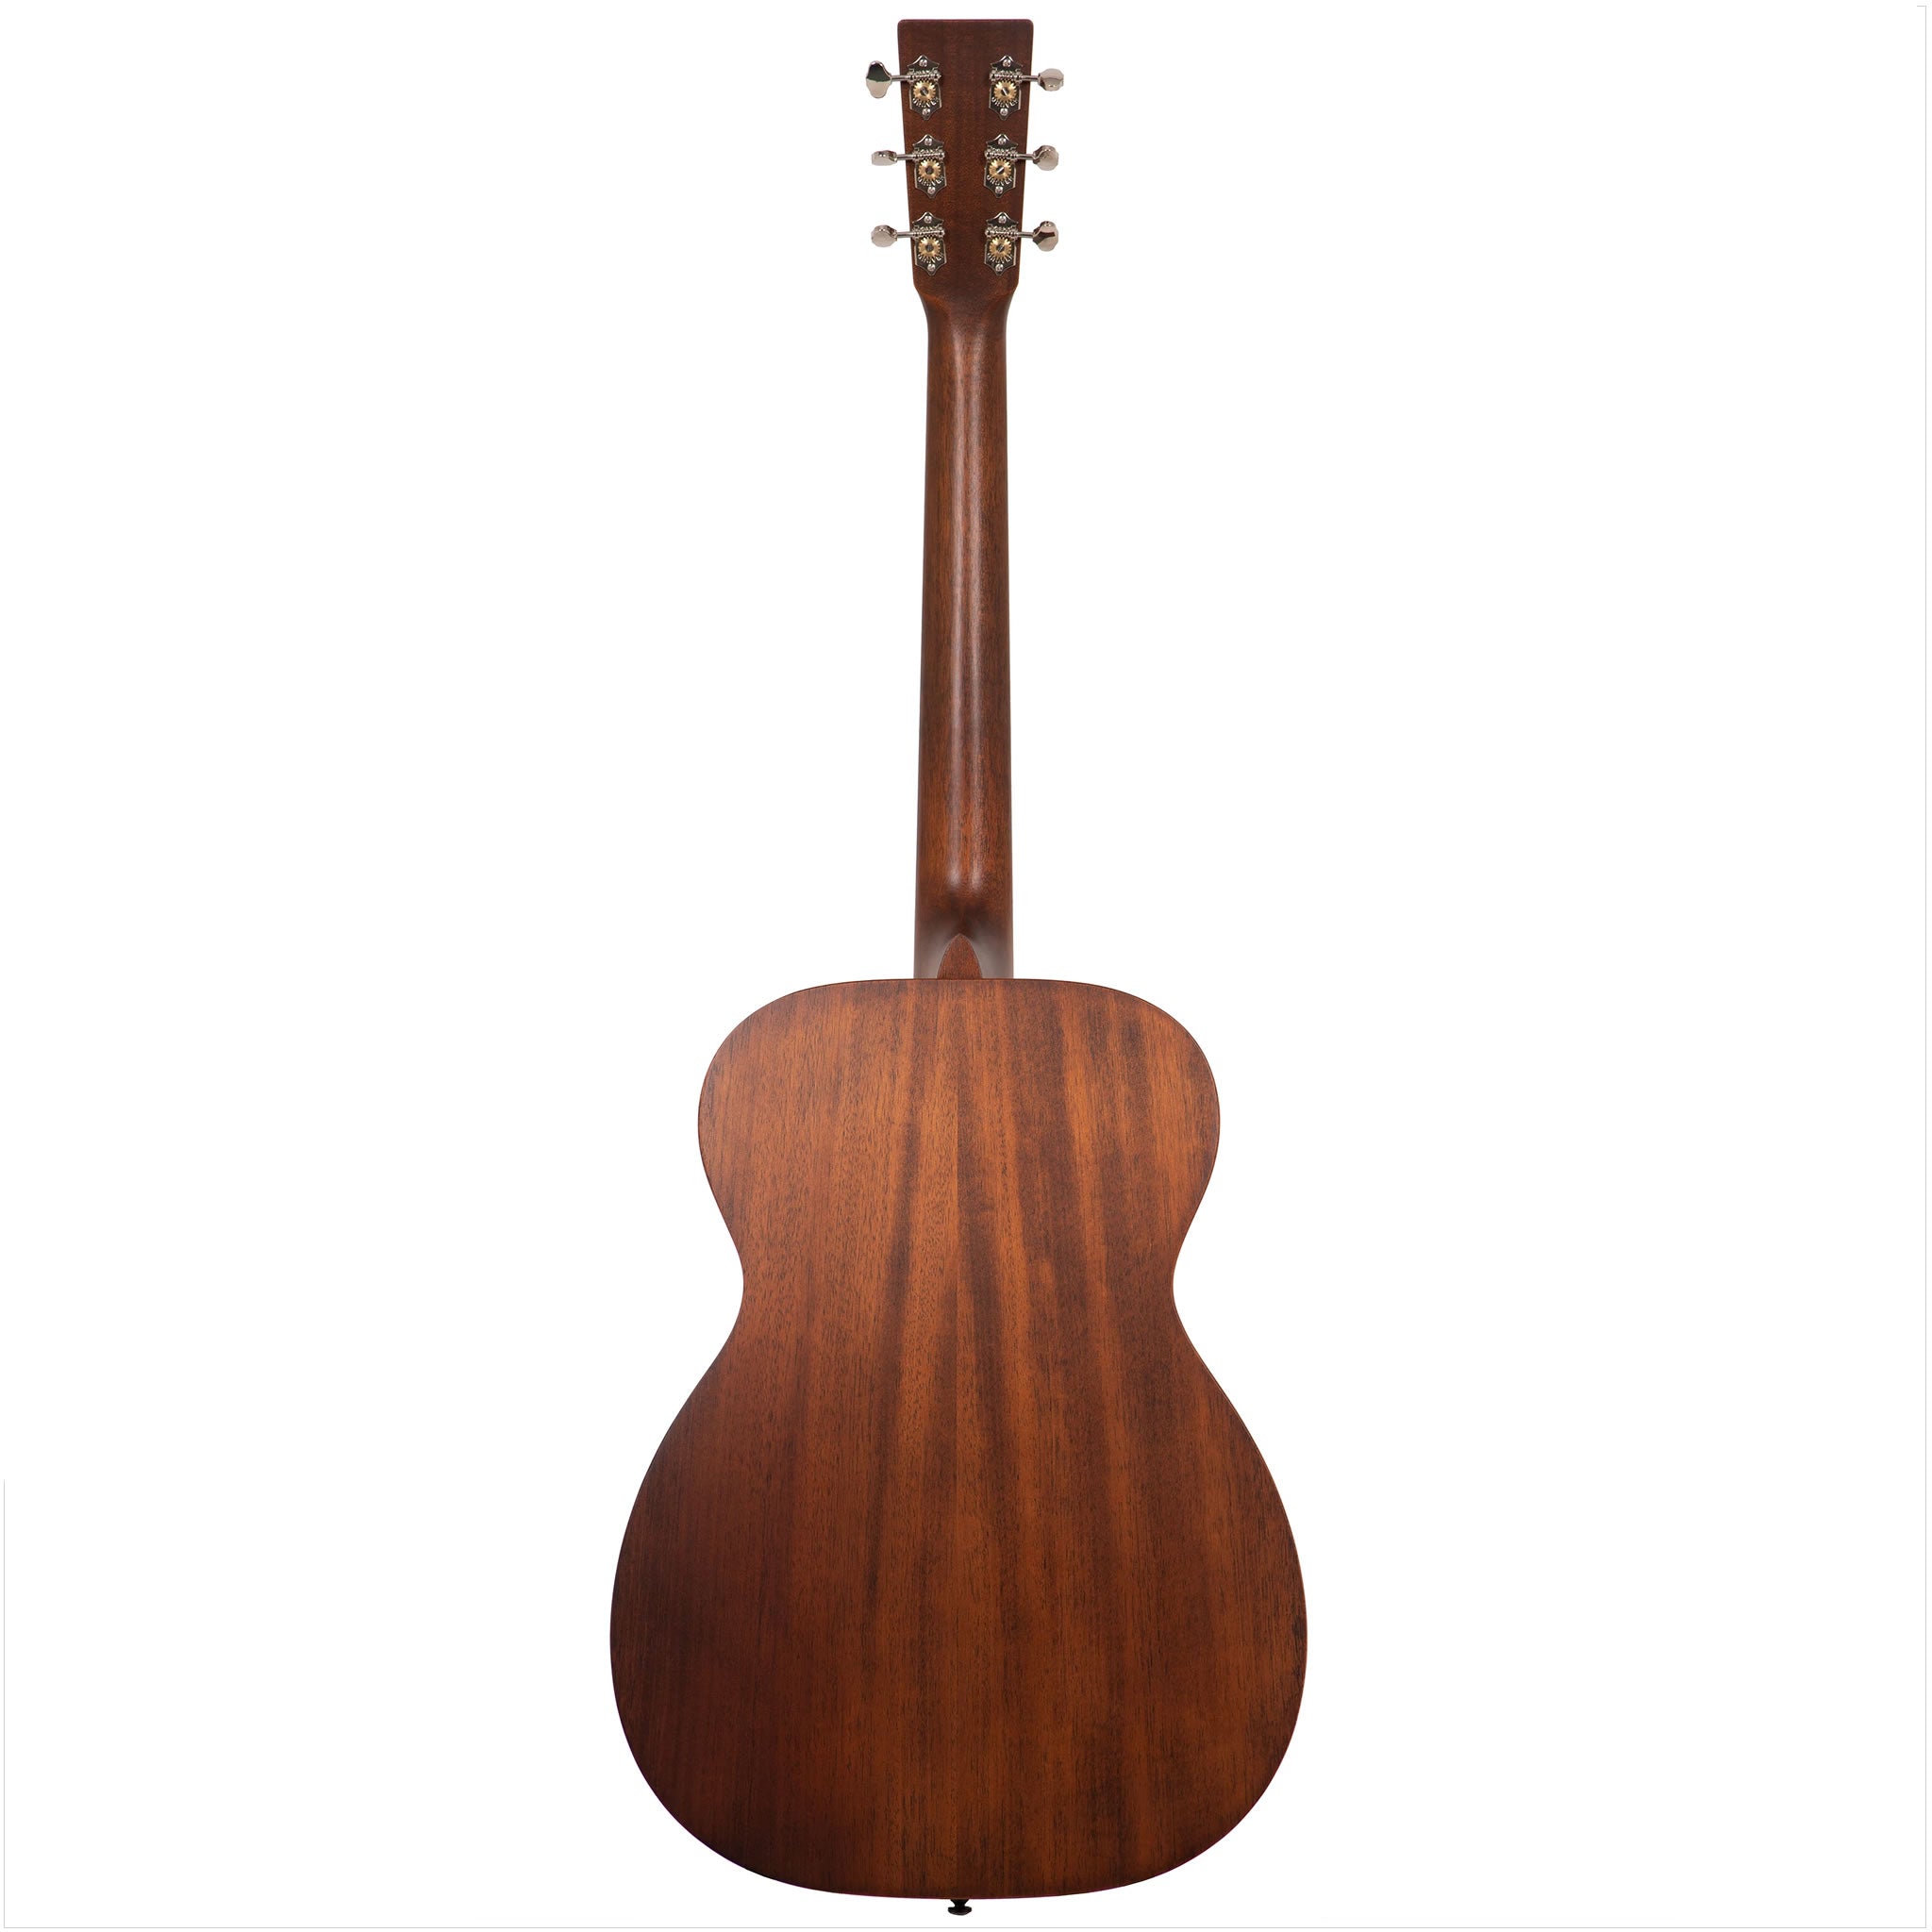 Martin 00-15M Acoustic Guitar - The Twelfth Fret